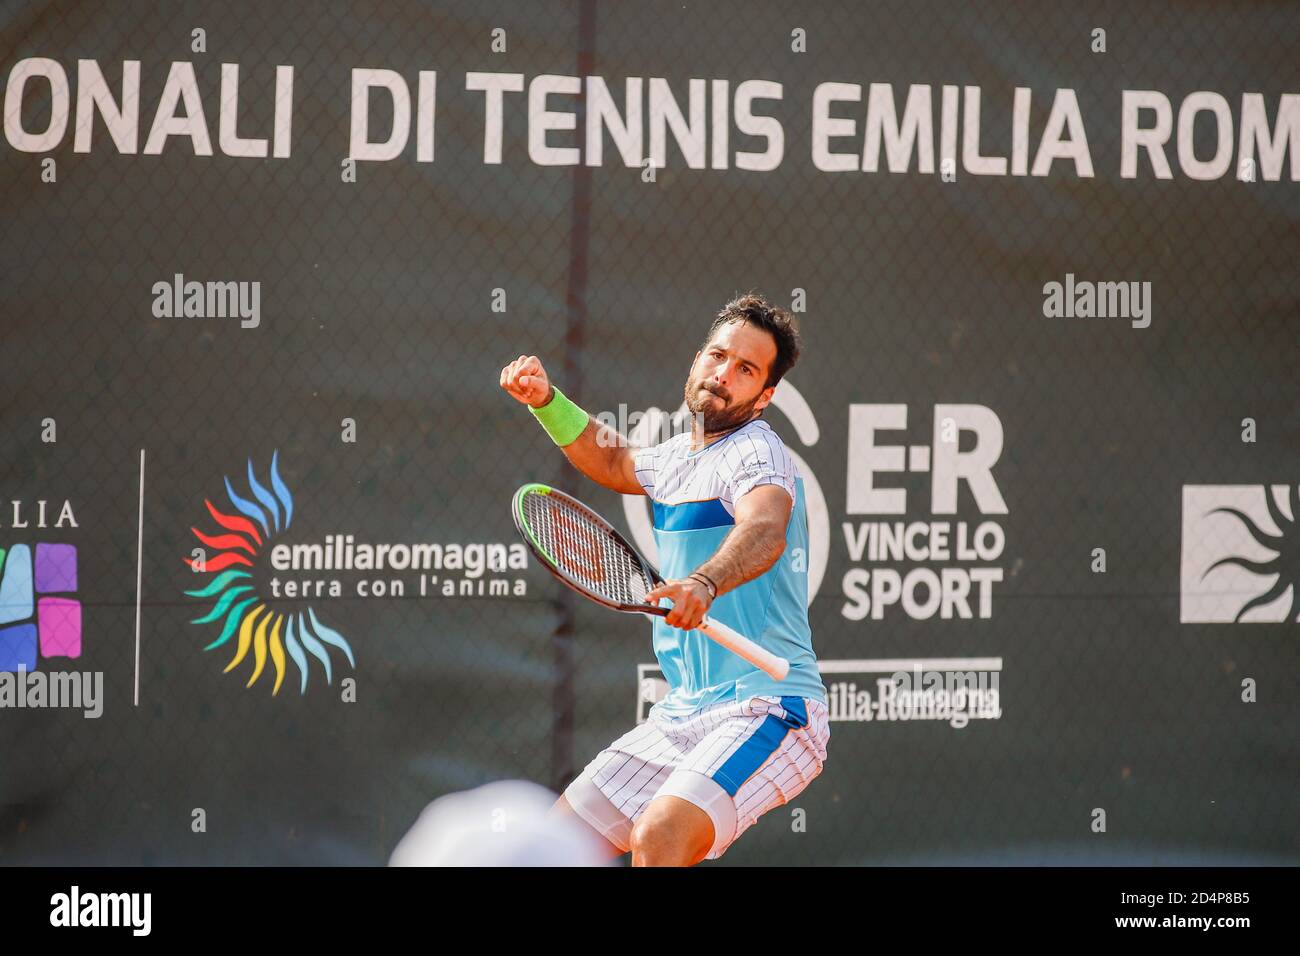 Alvatore Caruso pendant ATP Challenger 125 - Internazionali Emilia Romagna, tennis Internationals, parme, Italie, 09 Oct 2020 crédit: LM/Roberta Corradi Banque D'Images